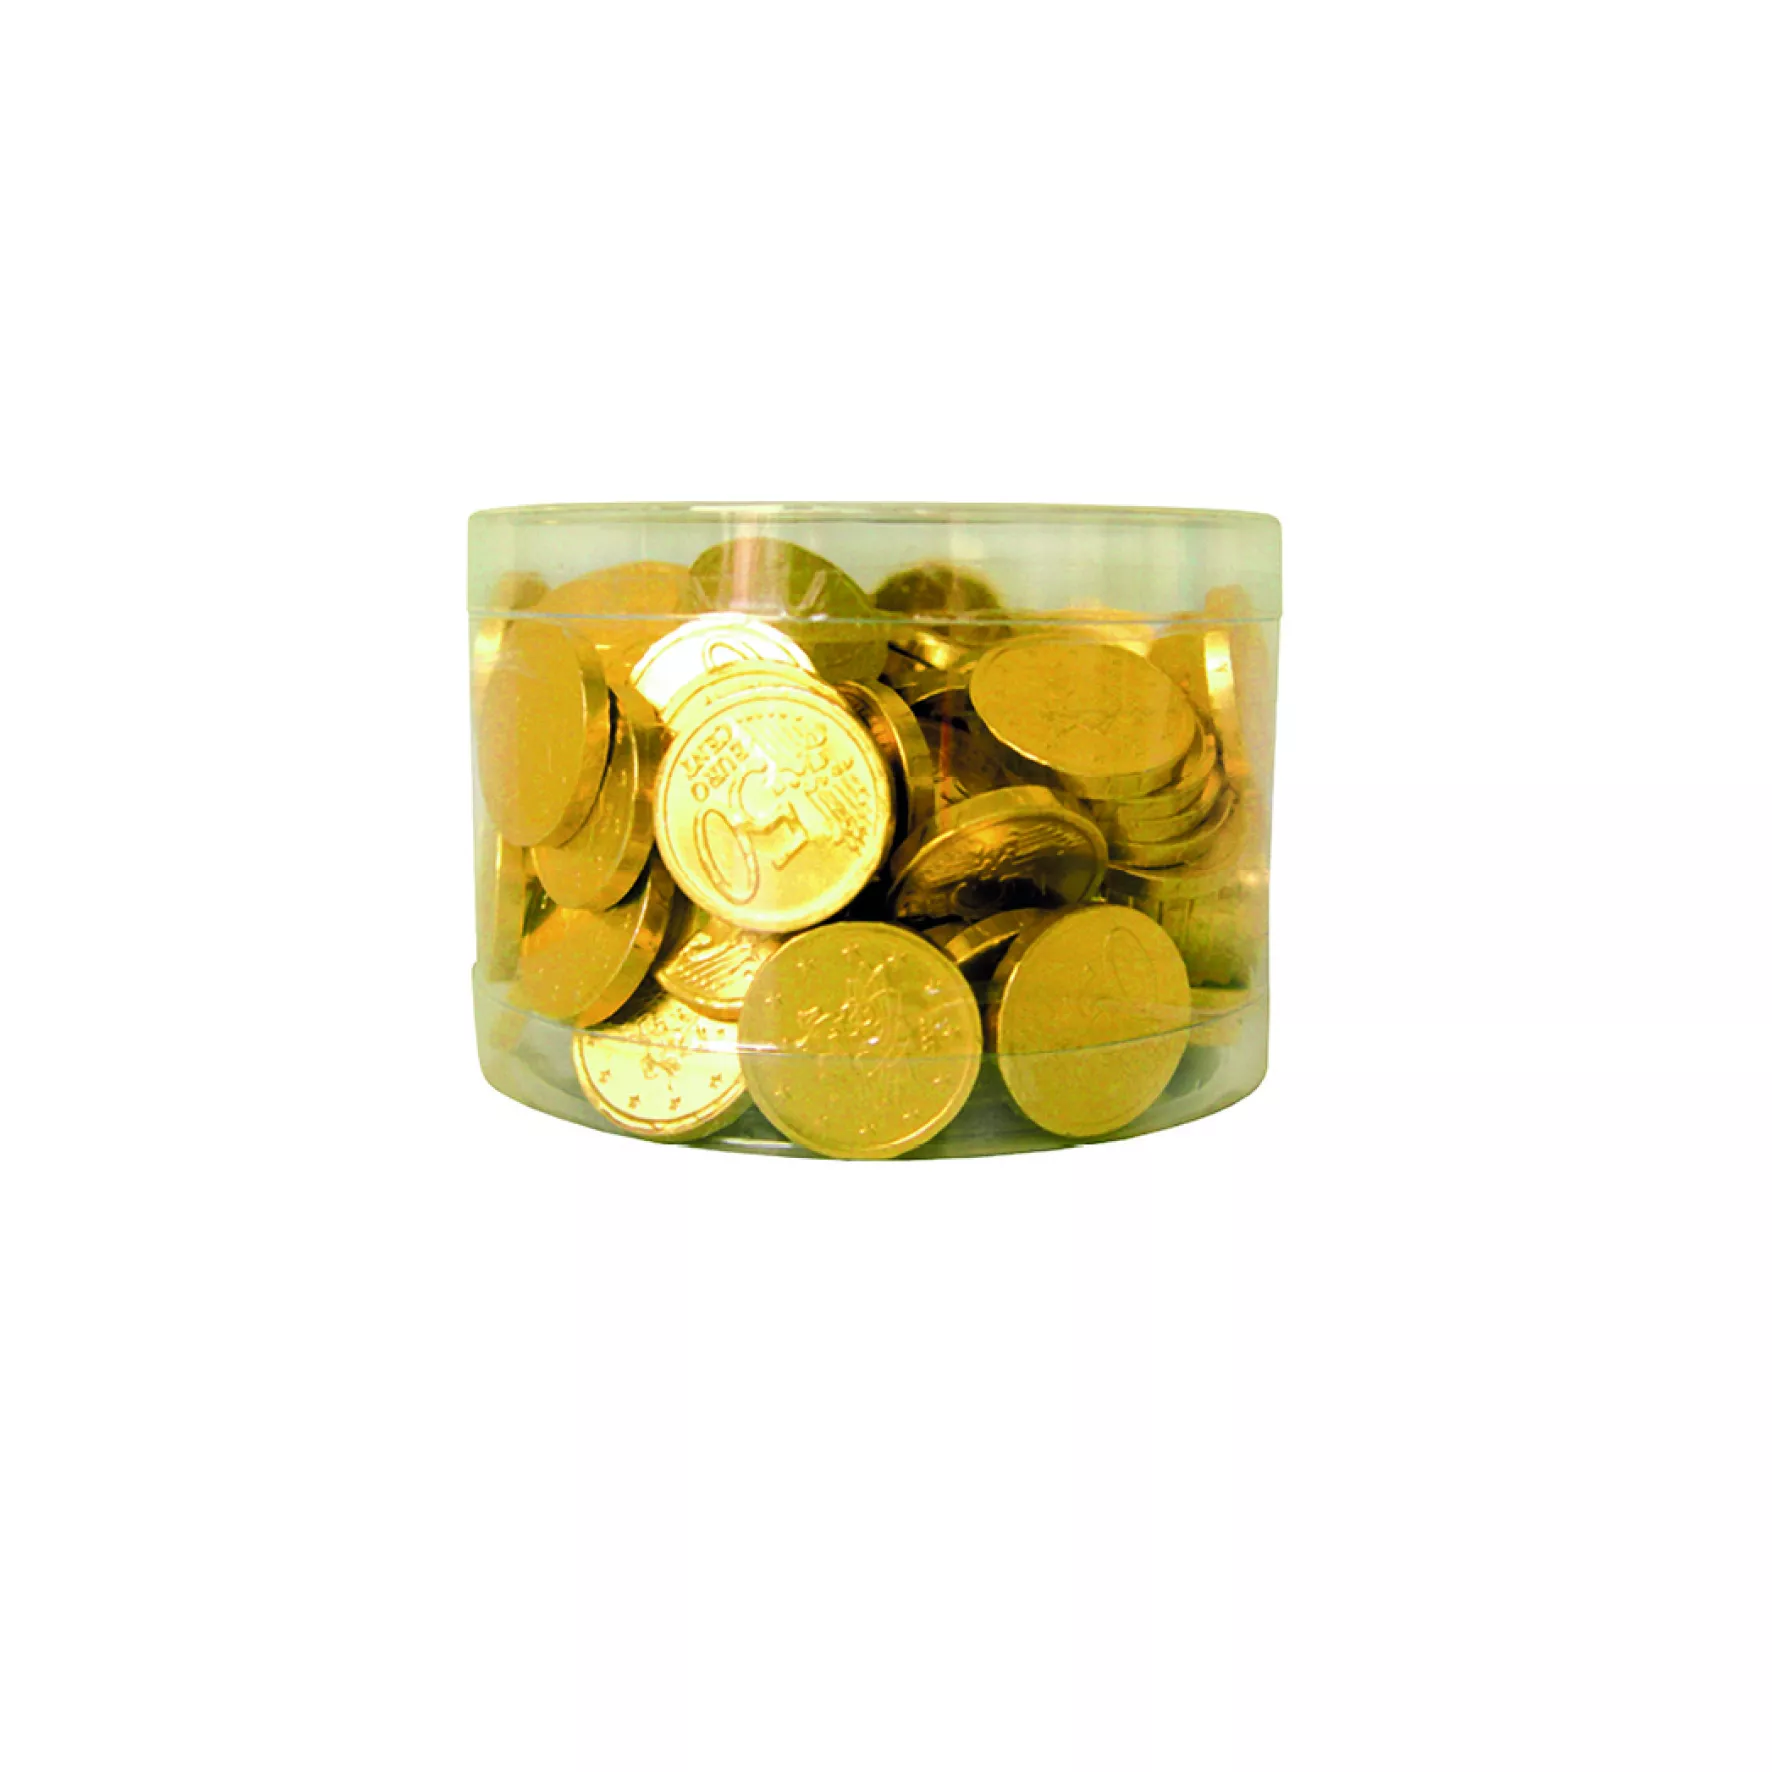 Coins in a box 450 g